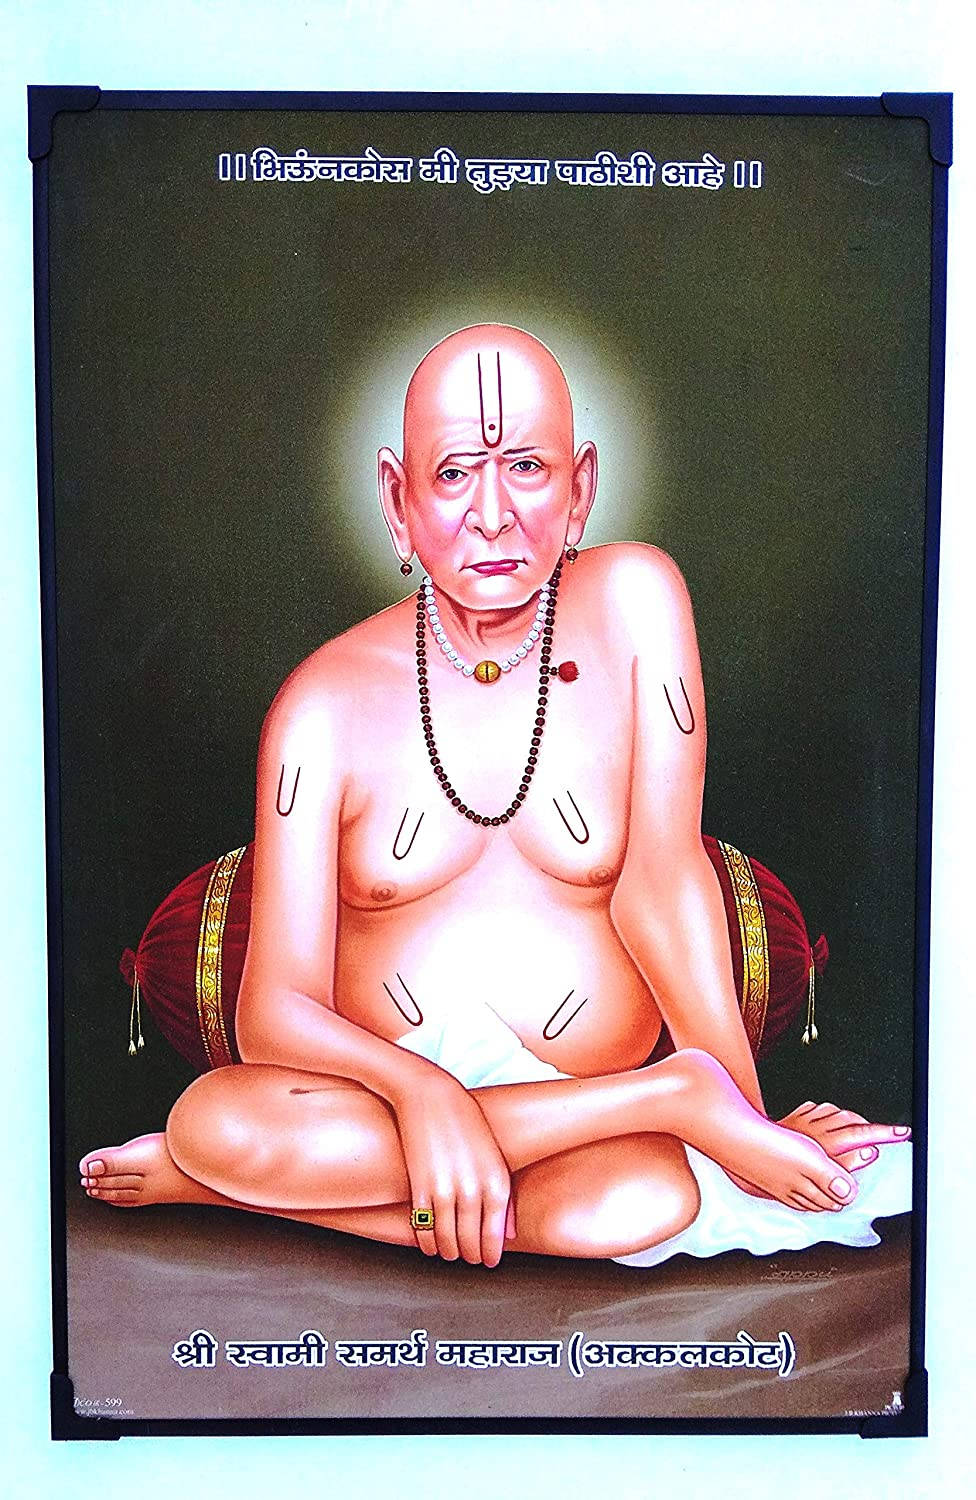 Swami Samarth Punyatithi 2022 massages in marathi  Shree Swami Samarth  Punyatithi 2022 सवम समरथ पणयतथ नमतत तयन अभवदन पठव  मरठ सदश  shree swami samarth punyatithi 2022 